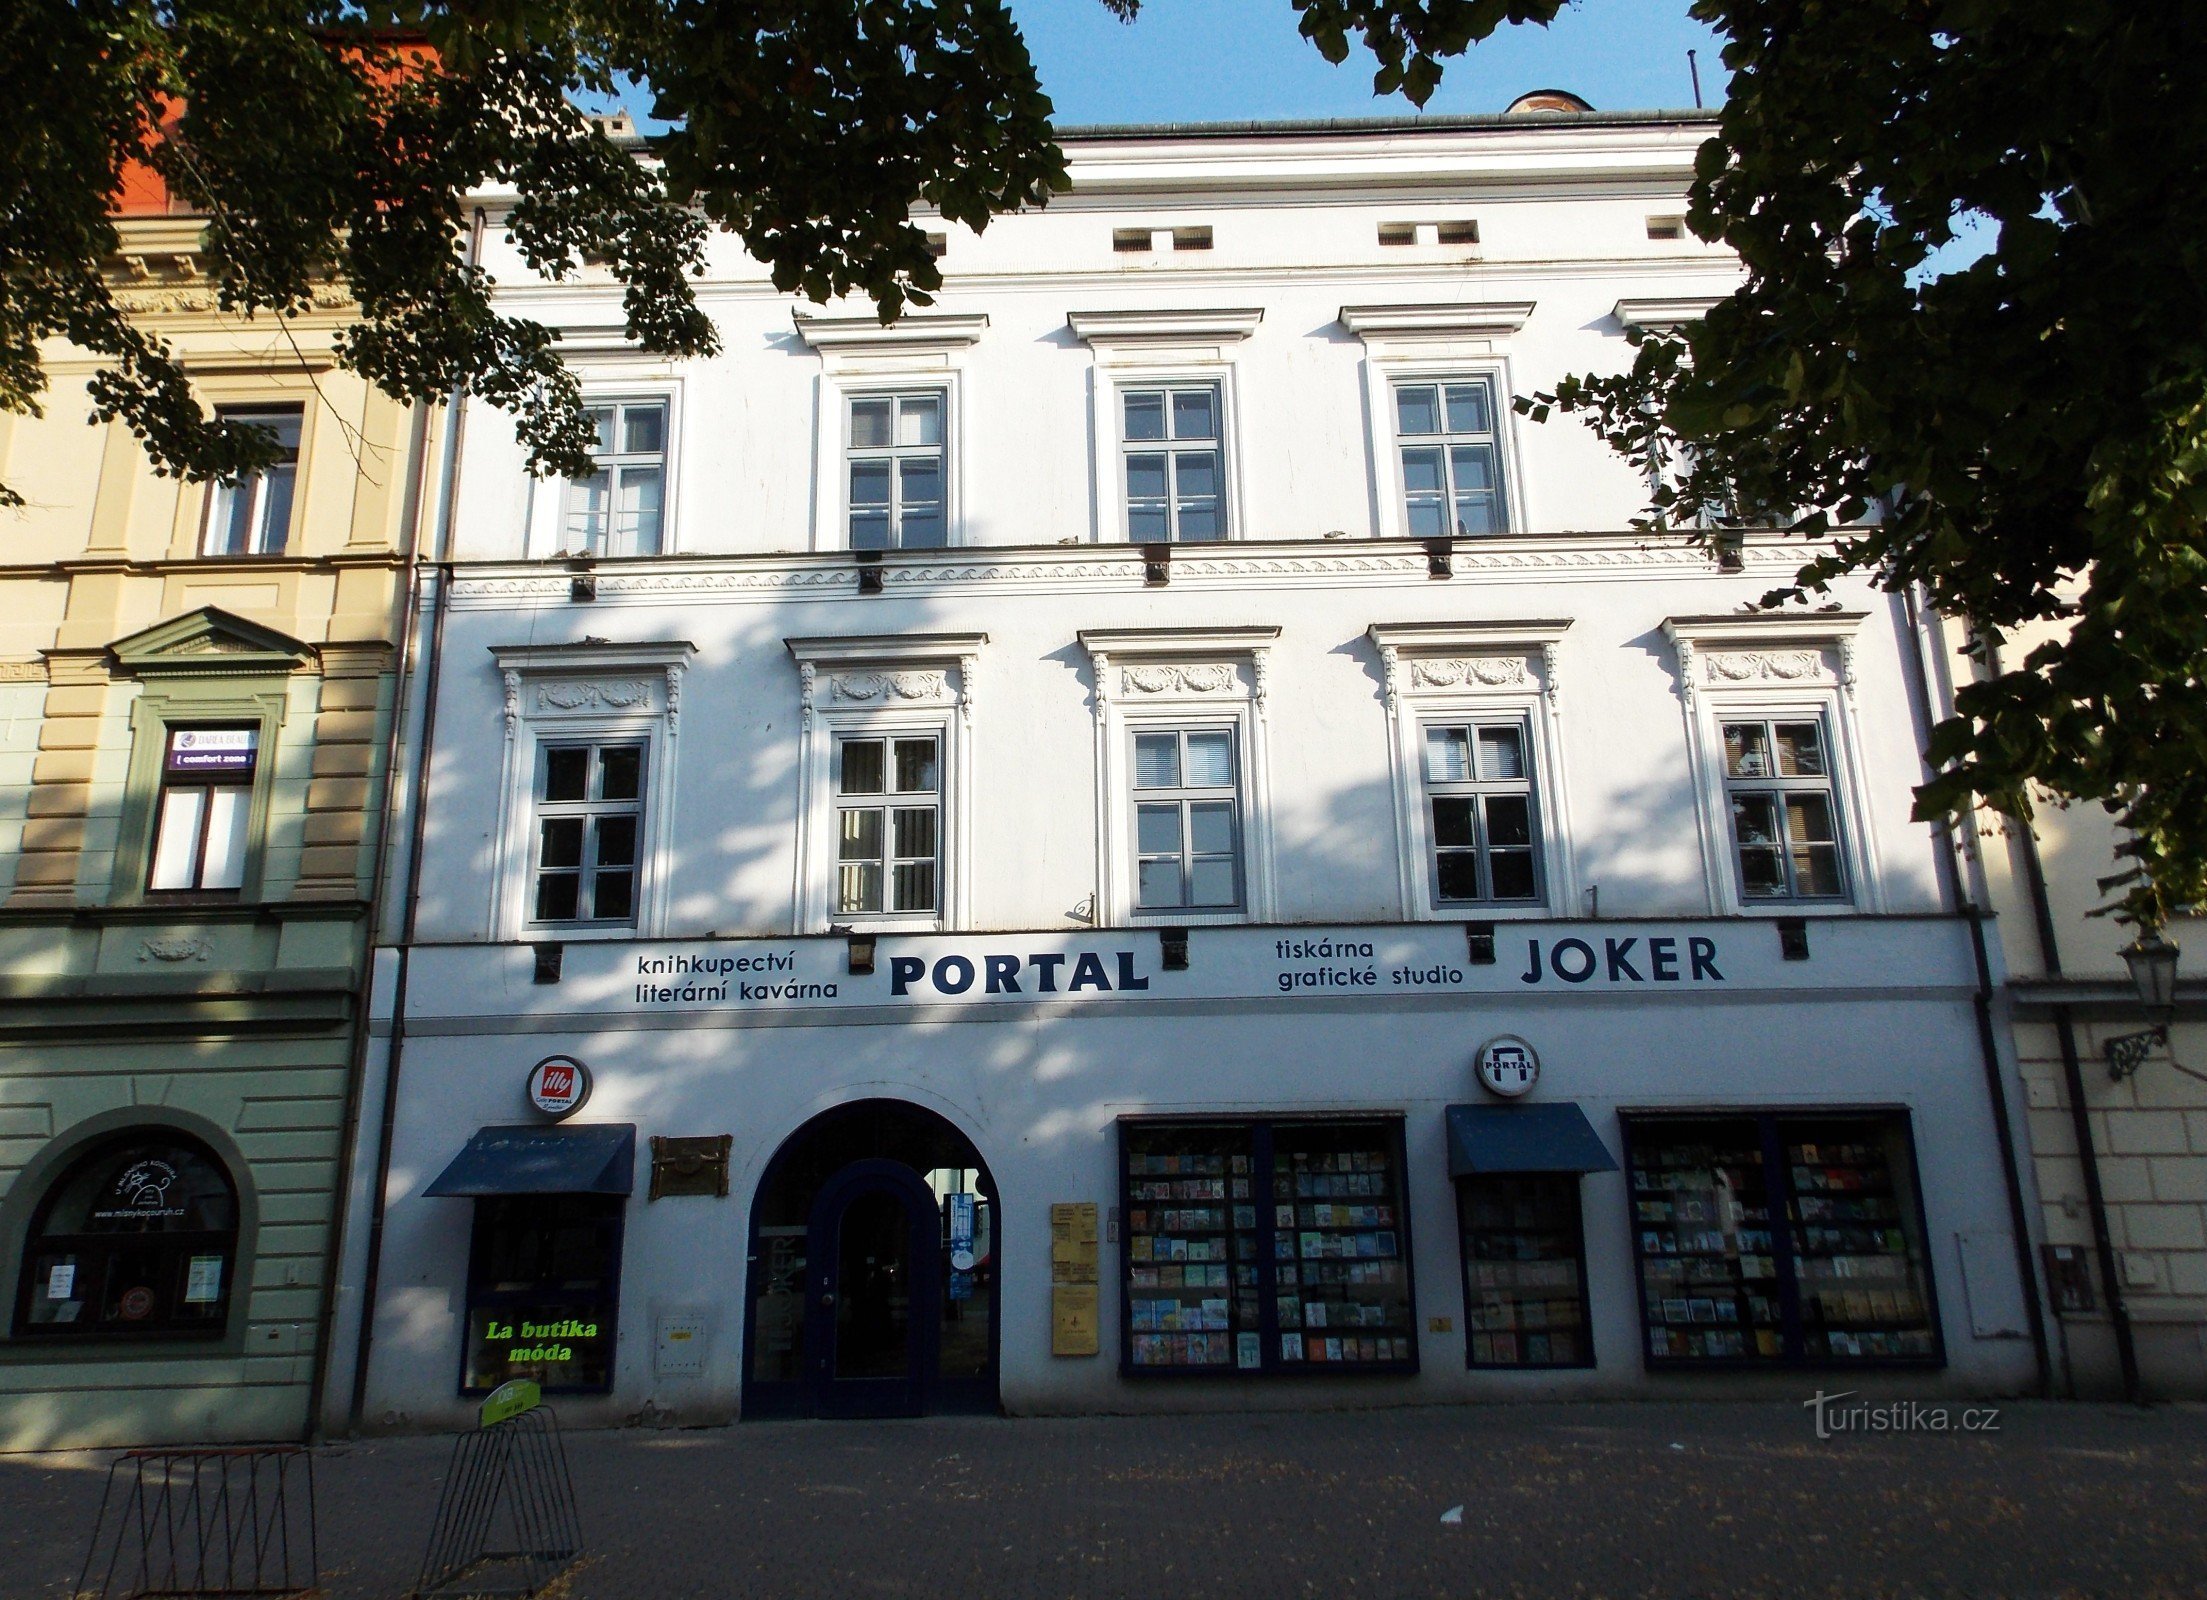 Casa del Libro del Portal - Uherské Hradiště